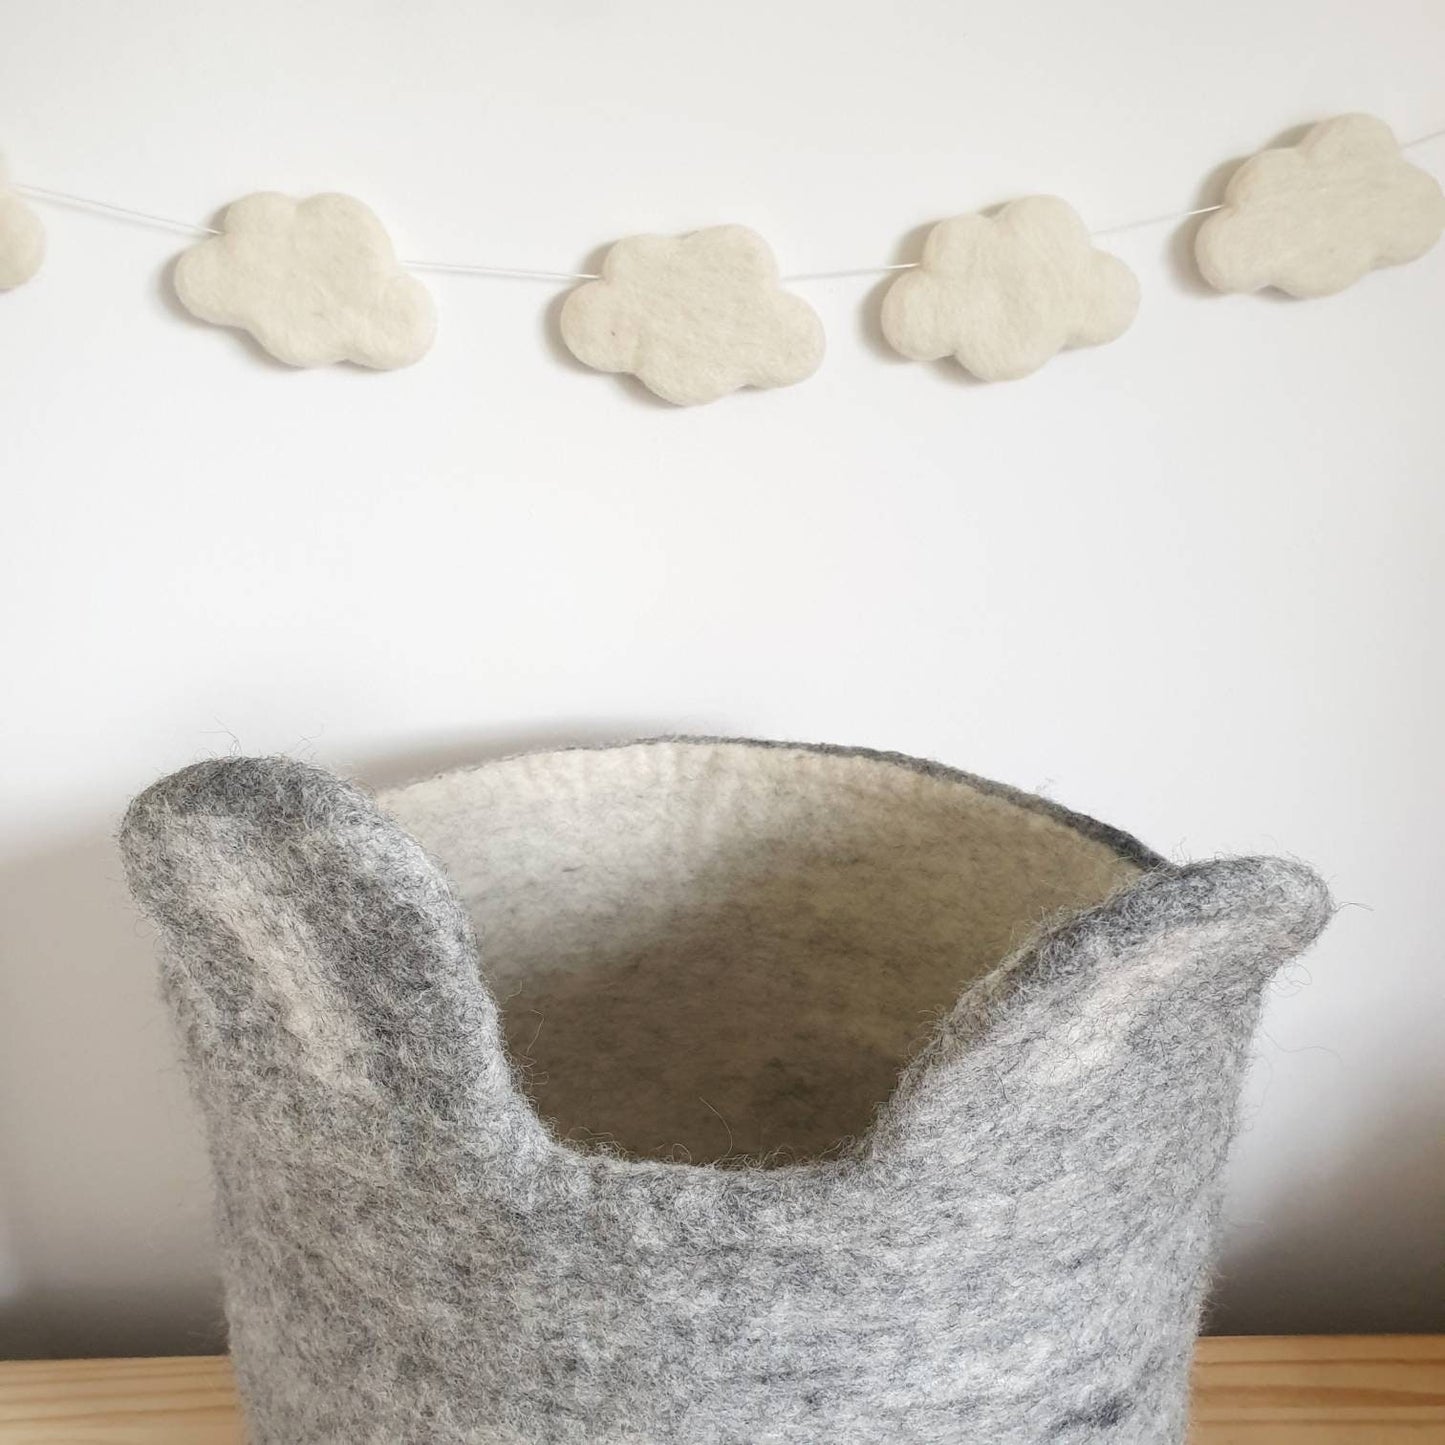 Handmade Bunny storage basket | 100% felted wool